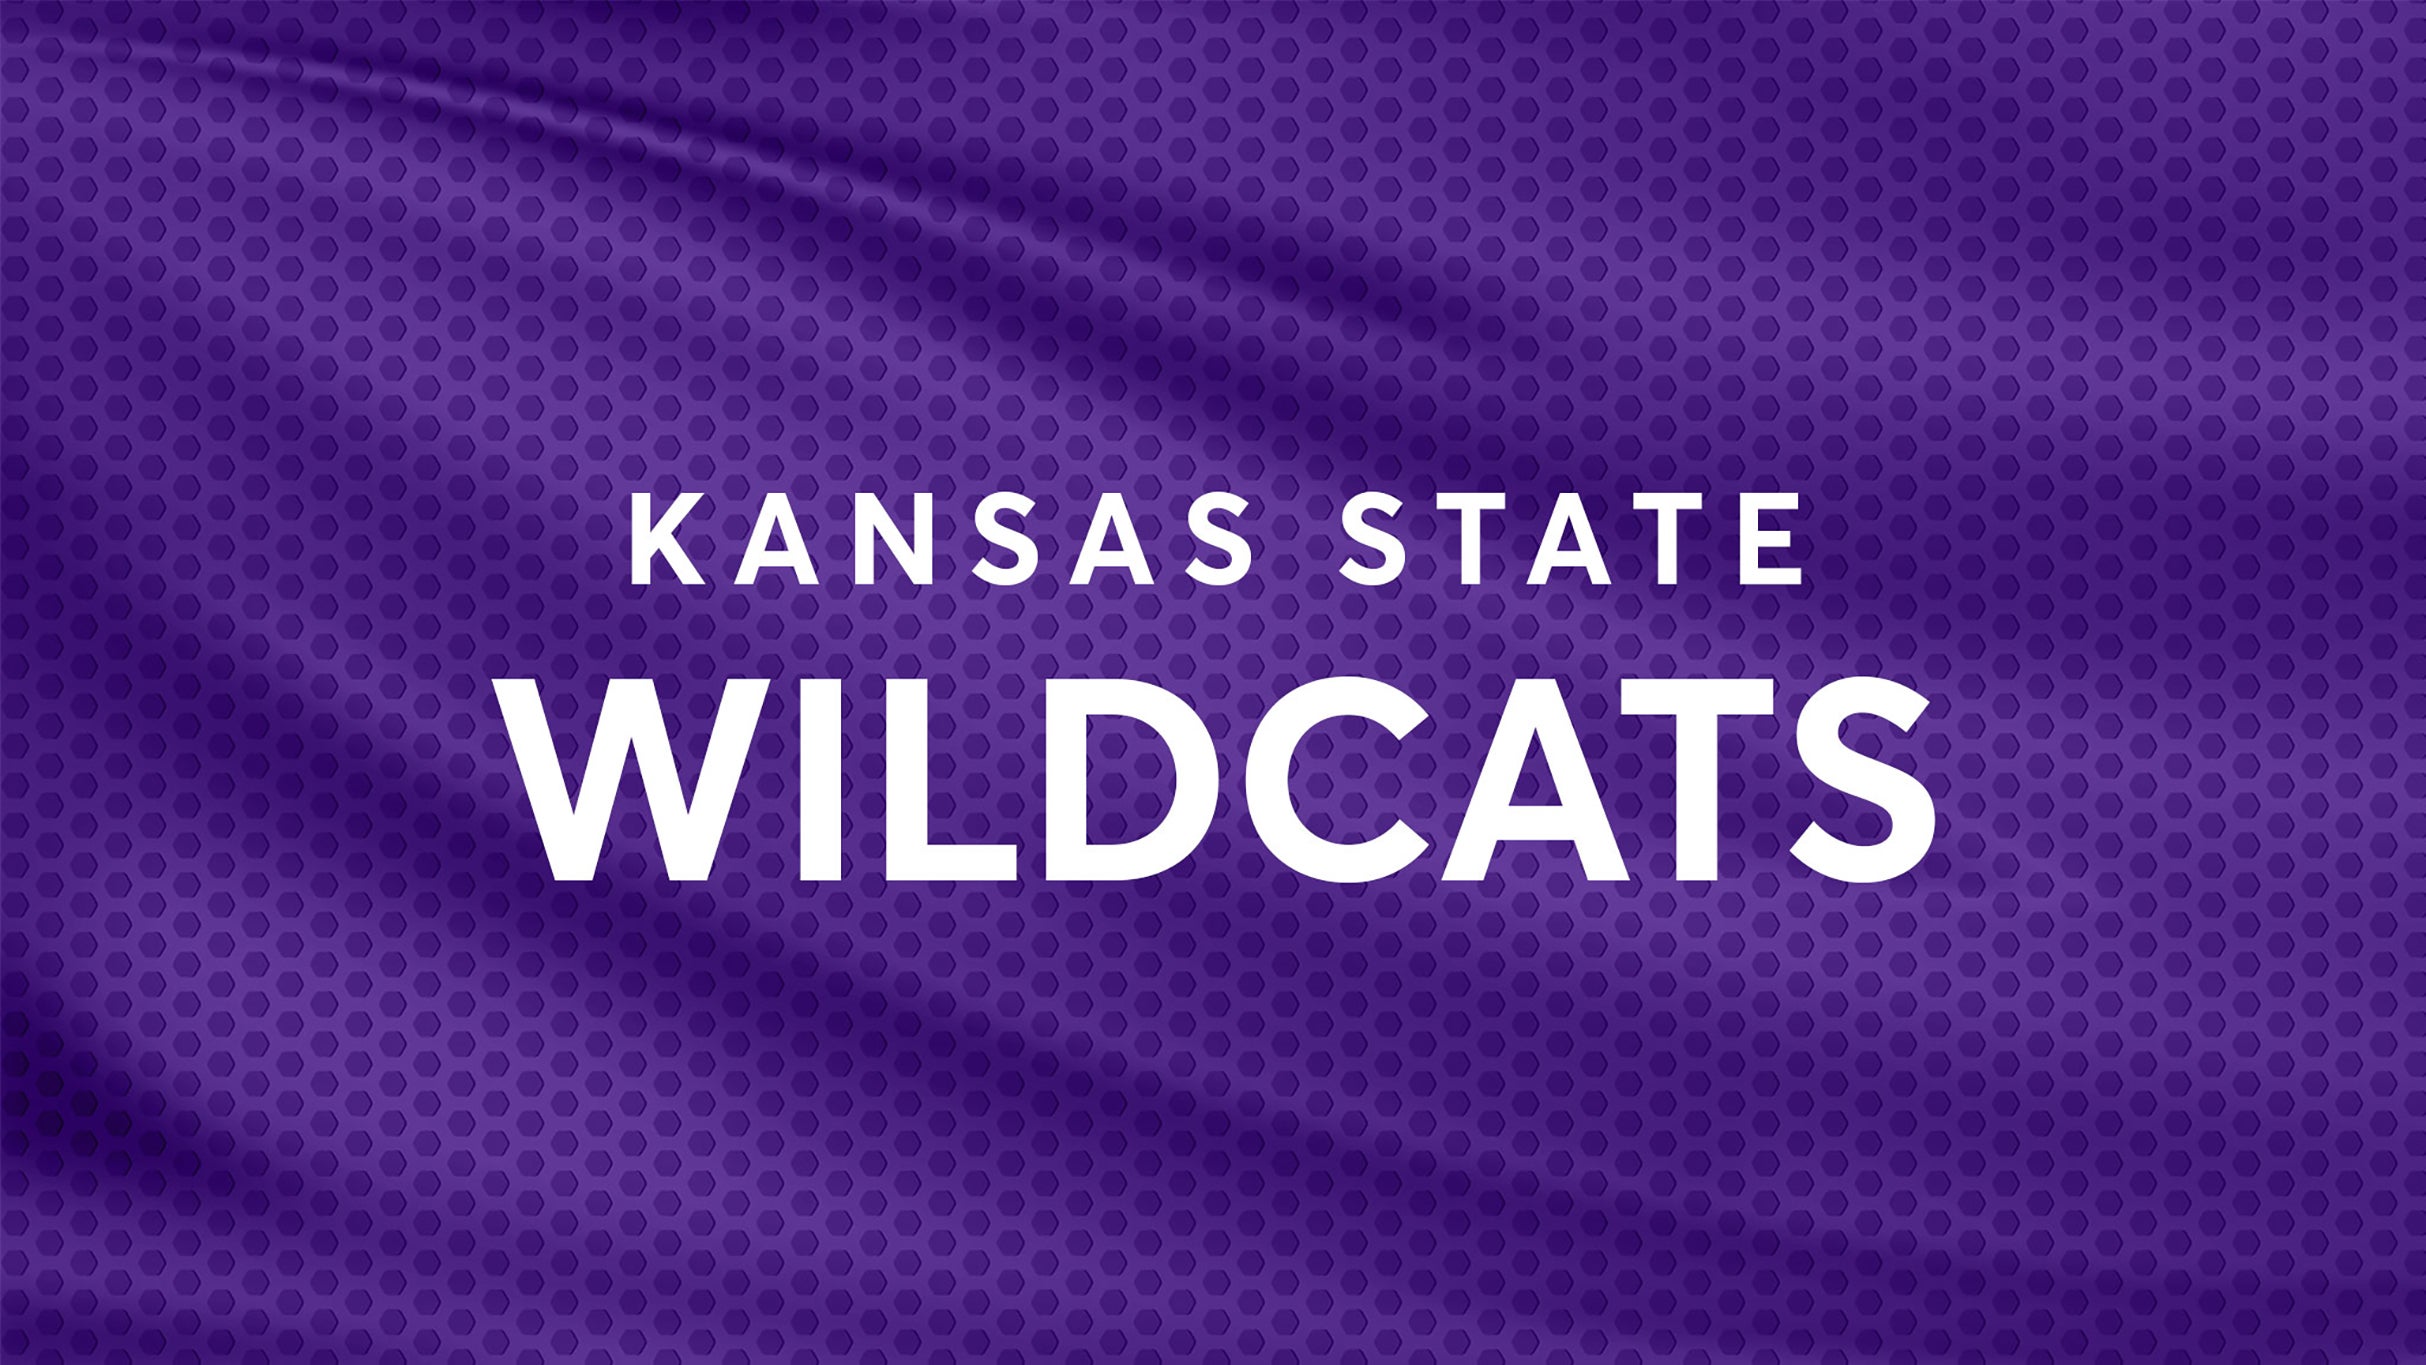 Kansas State Wildcats Football vs. Arizona Wildcats Football